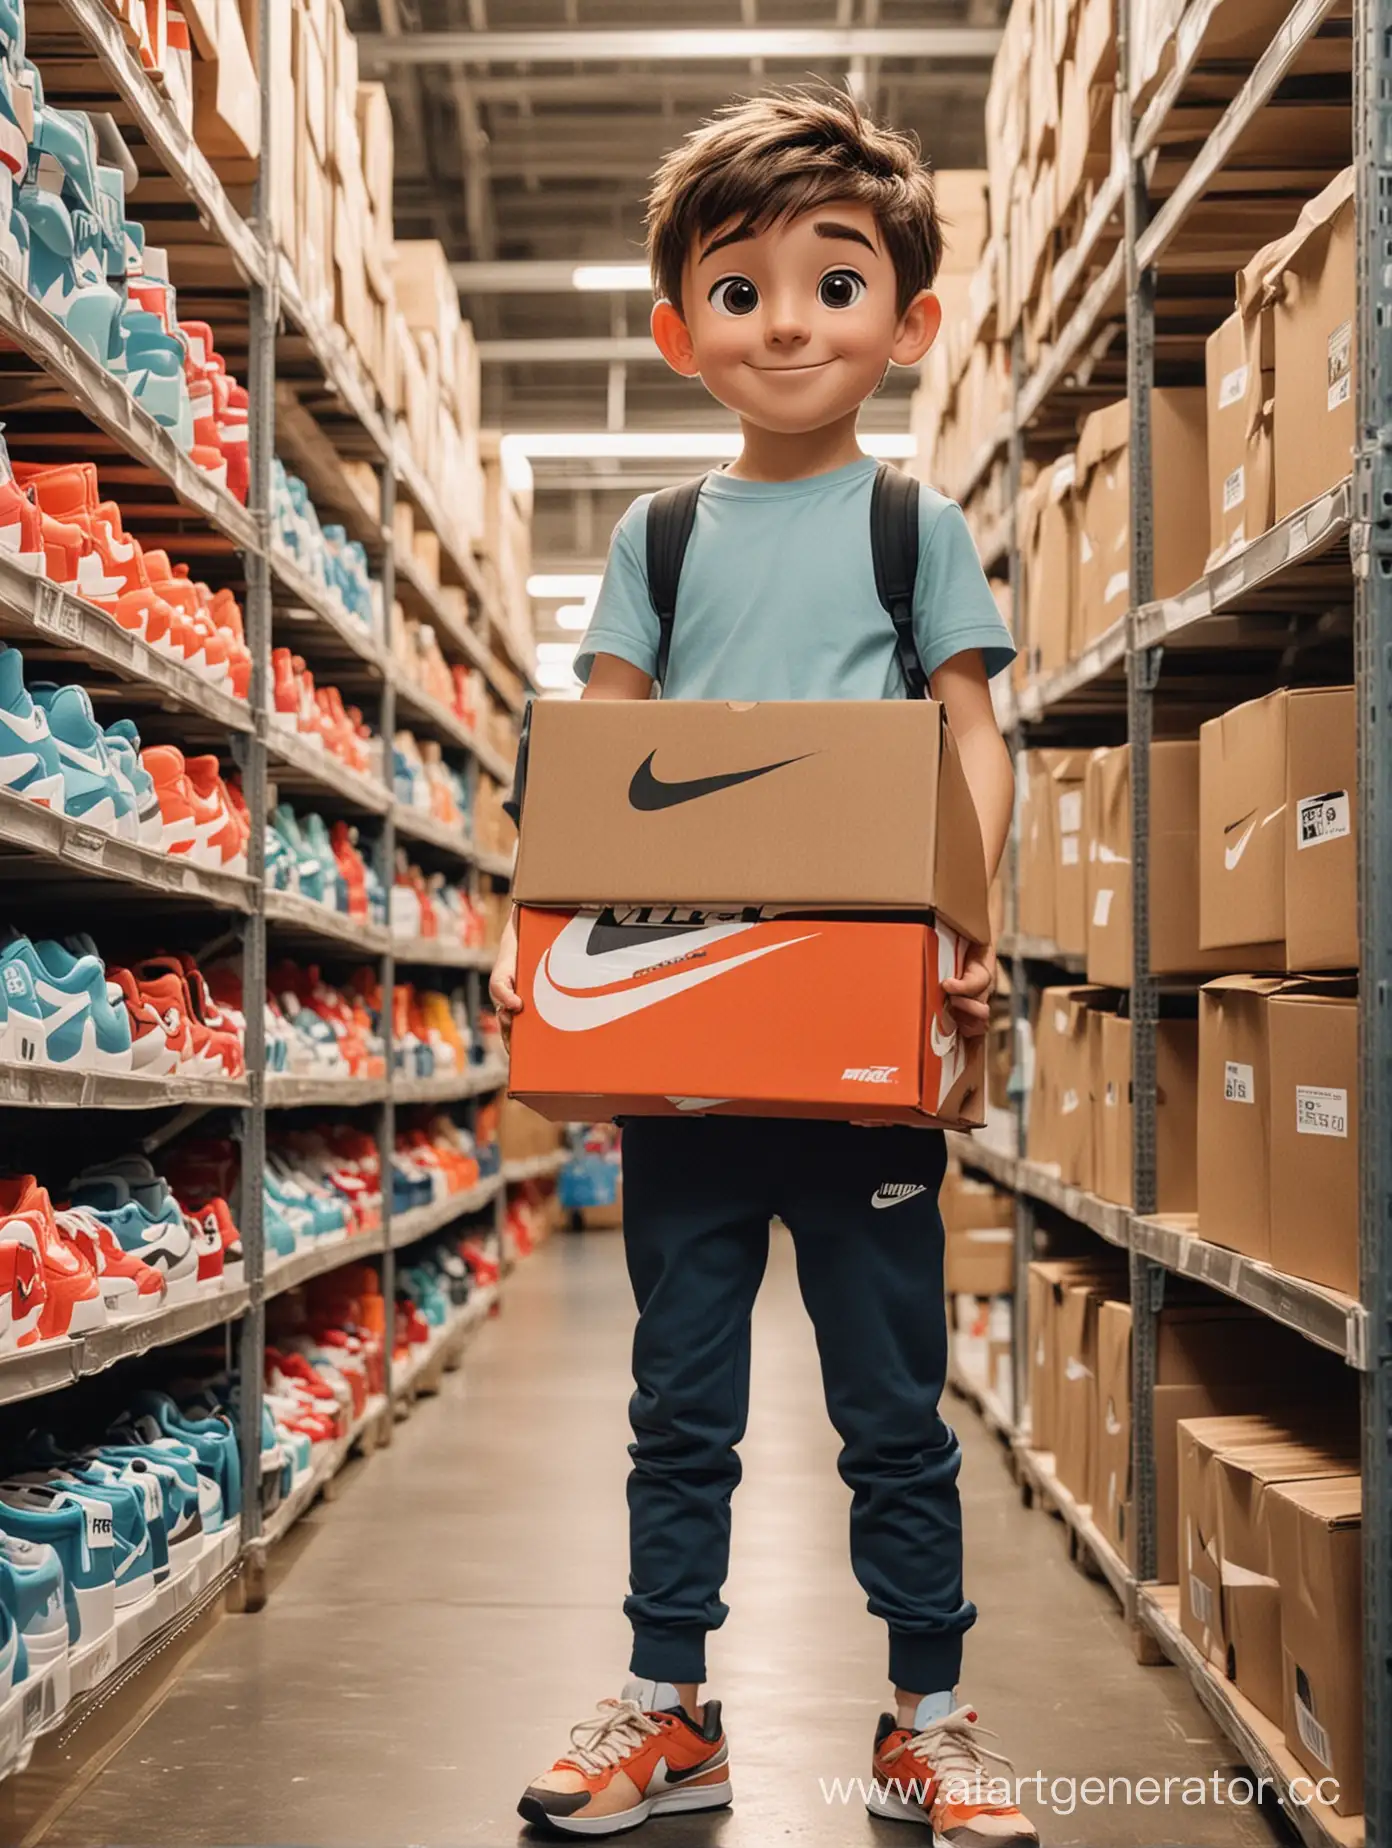 Cartoonish-Boy-Holding-Nike-Sneakers-in-Warehouse